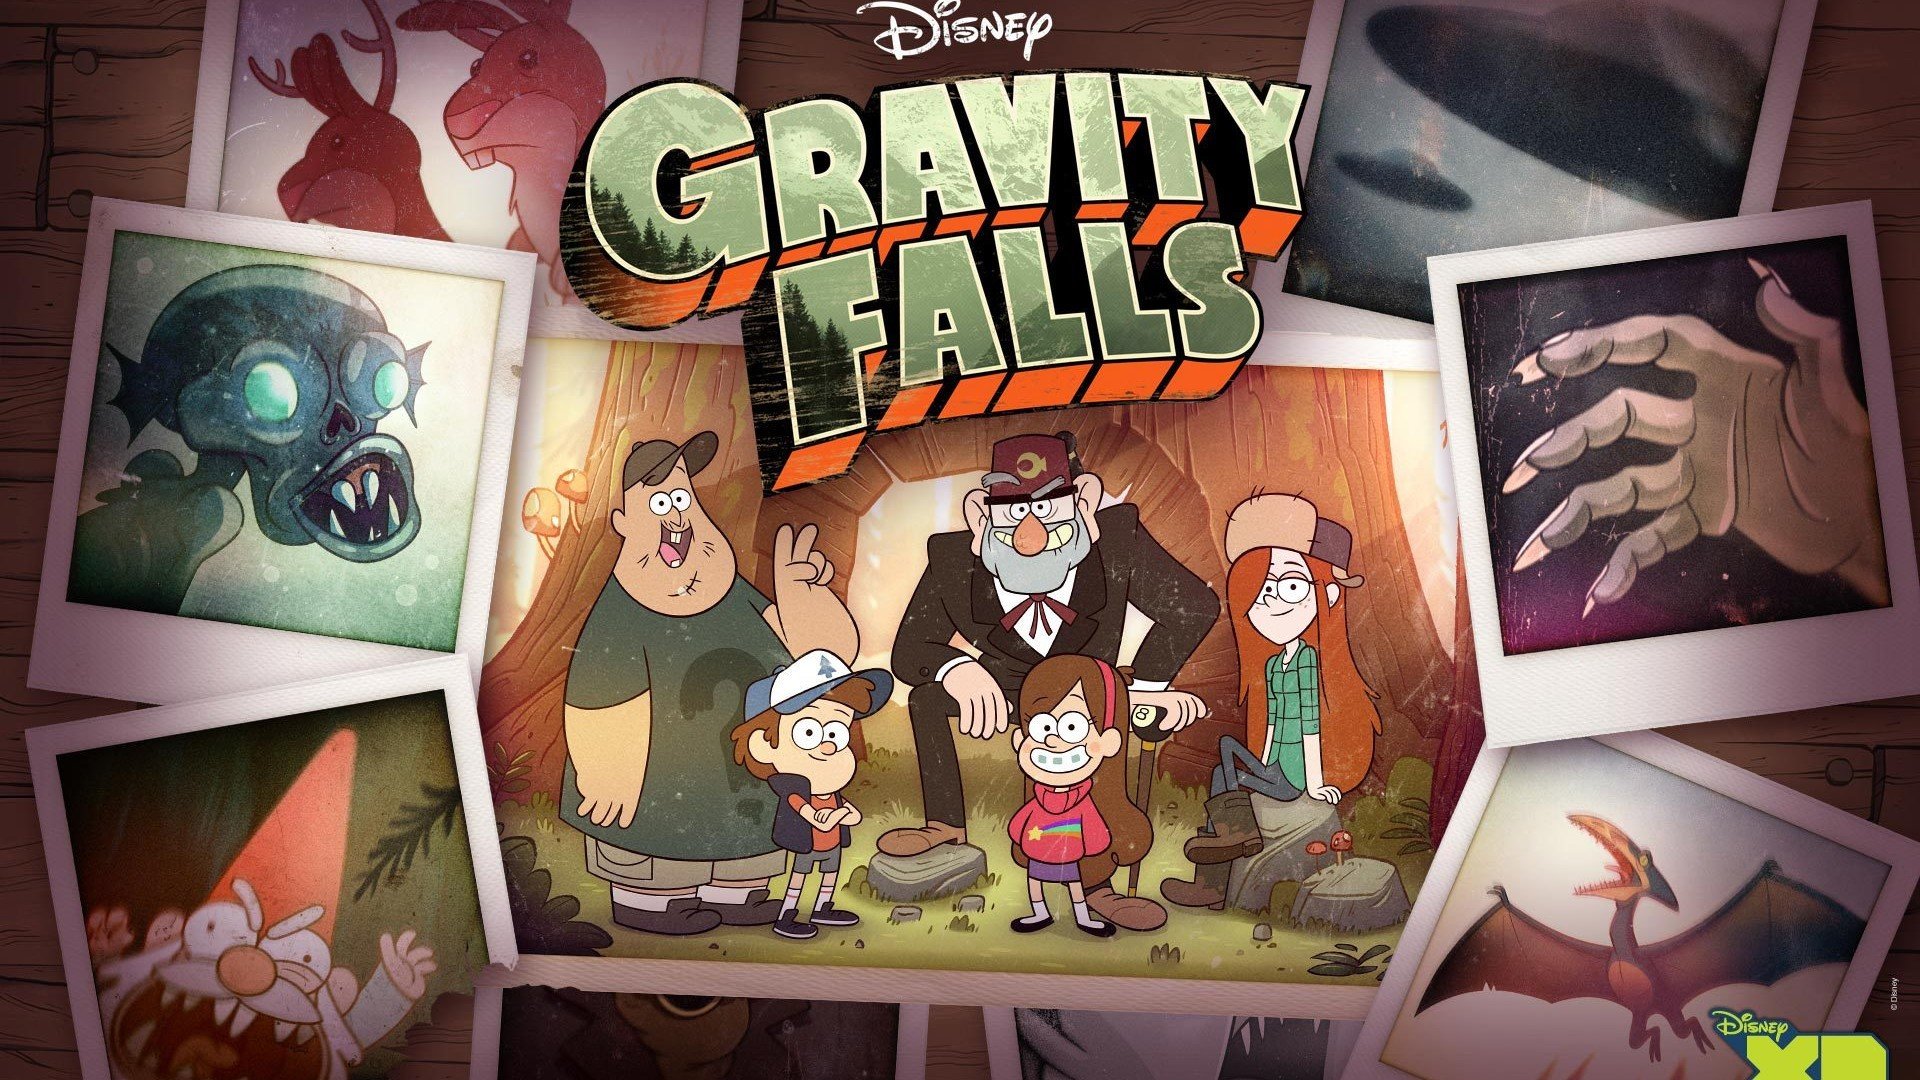  Gravity  Falls  HD Wallpapers Desktop and Mobile Images  